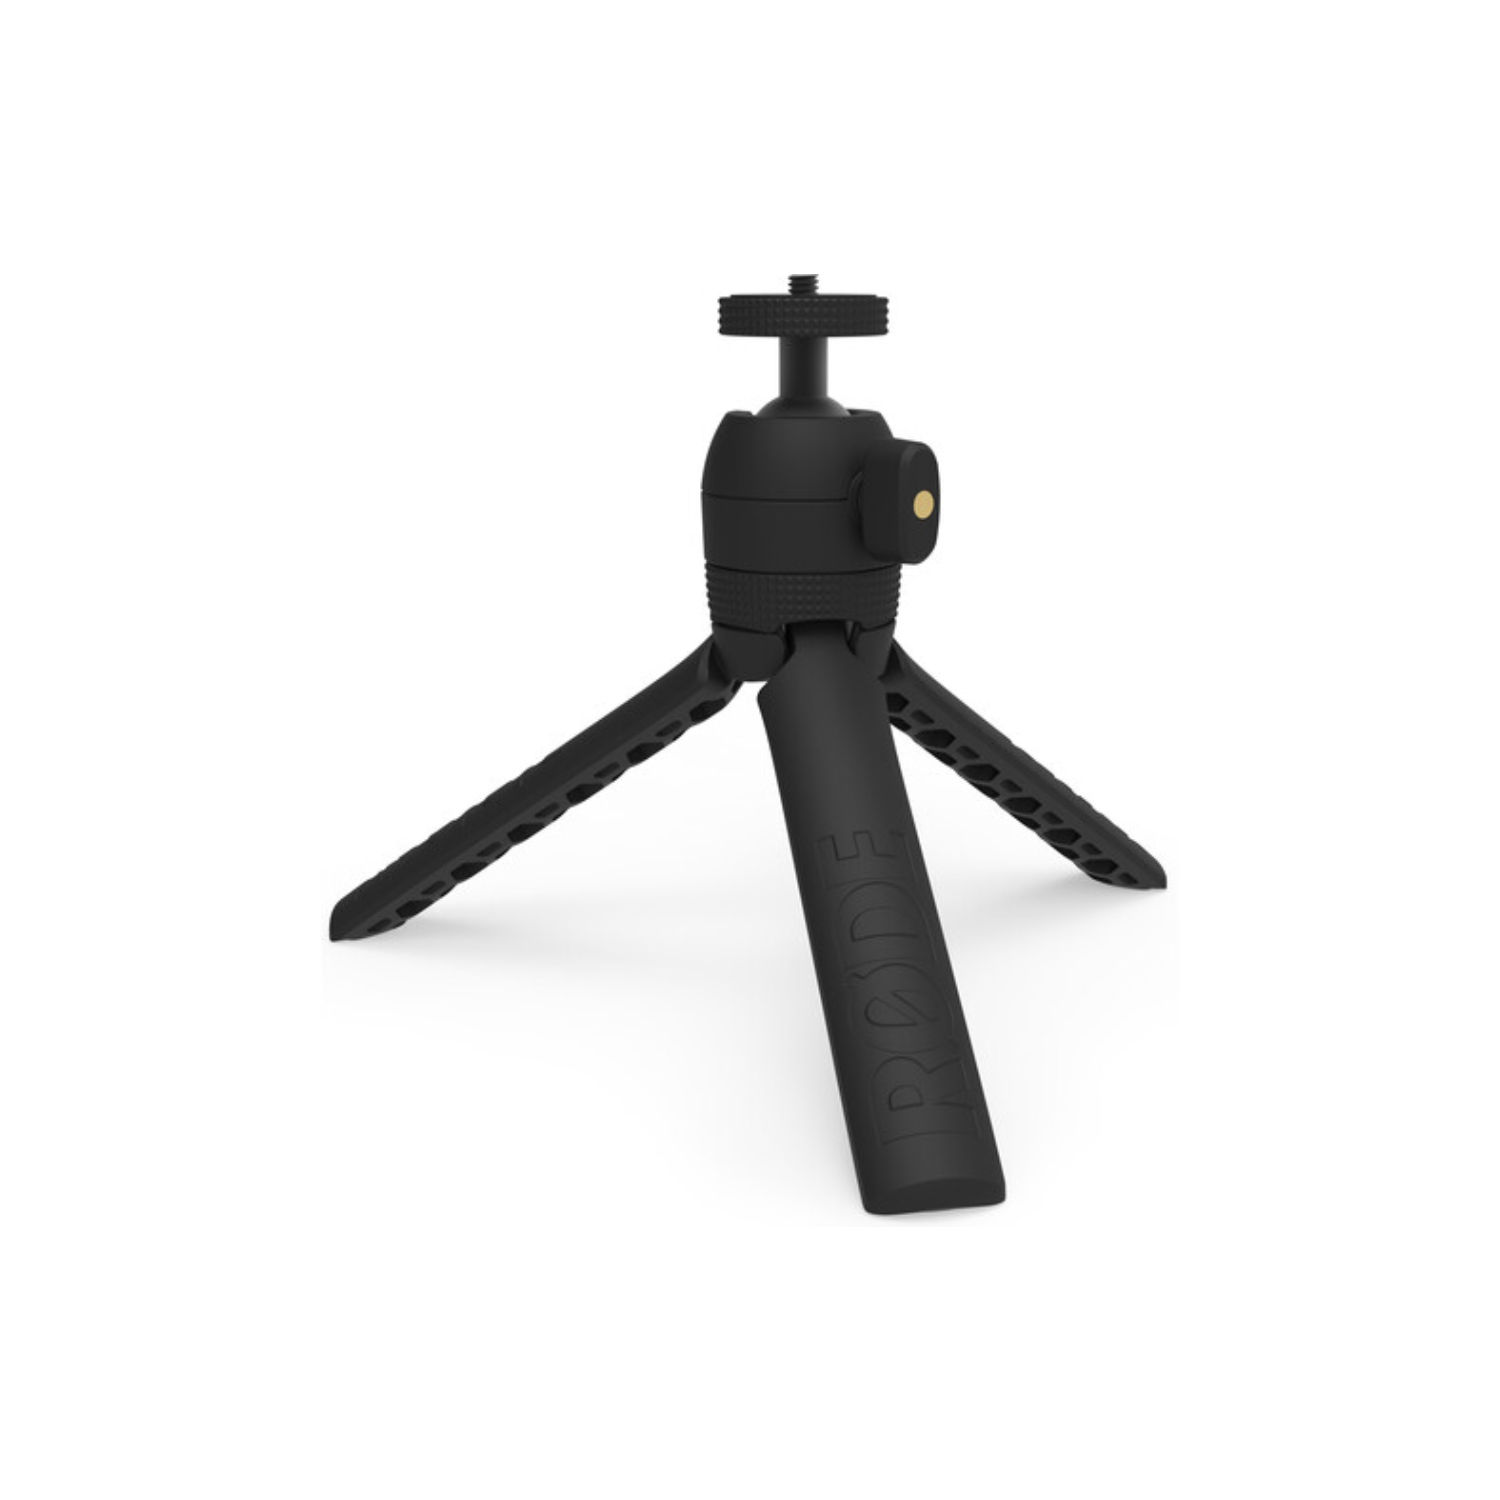 Rode Vlogger Kit - VideoMic Me-L, Tripod 2, Smart Grip, LED Light & Accessories - for iOS Devices